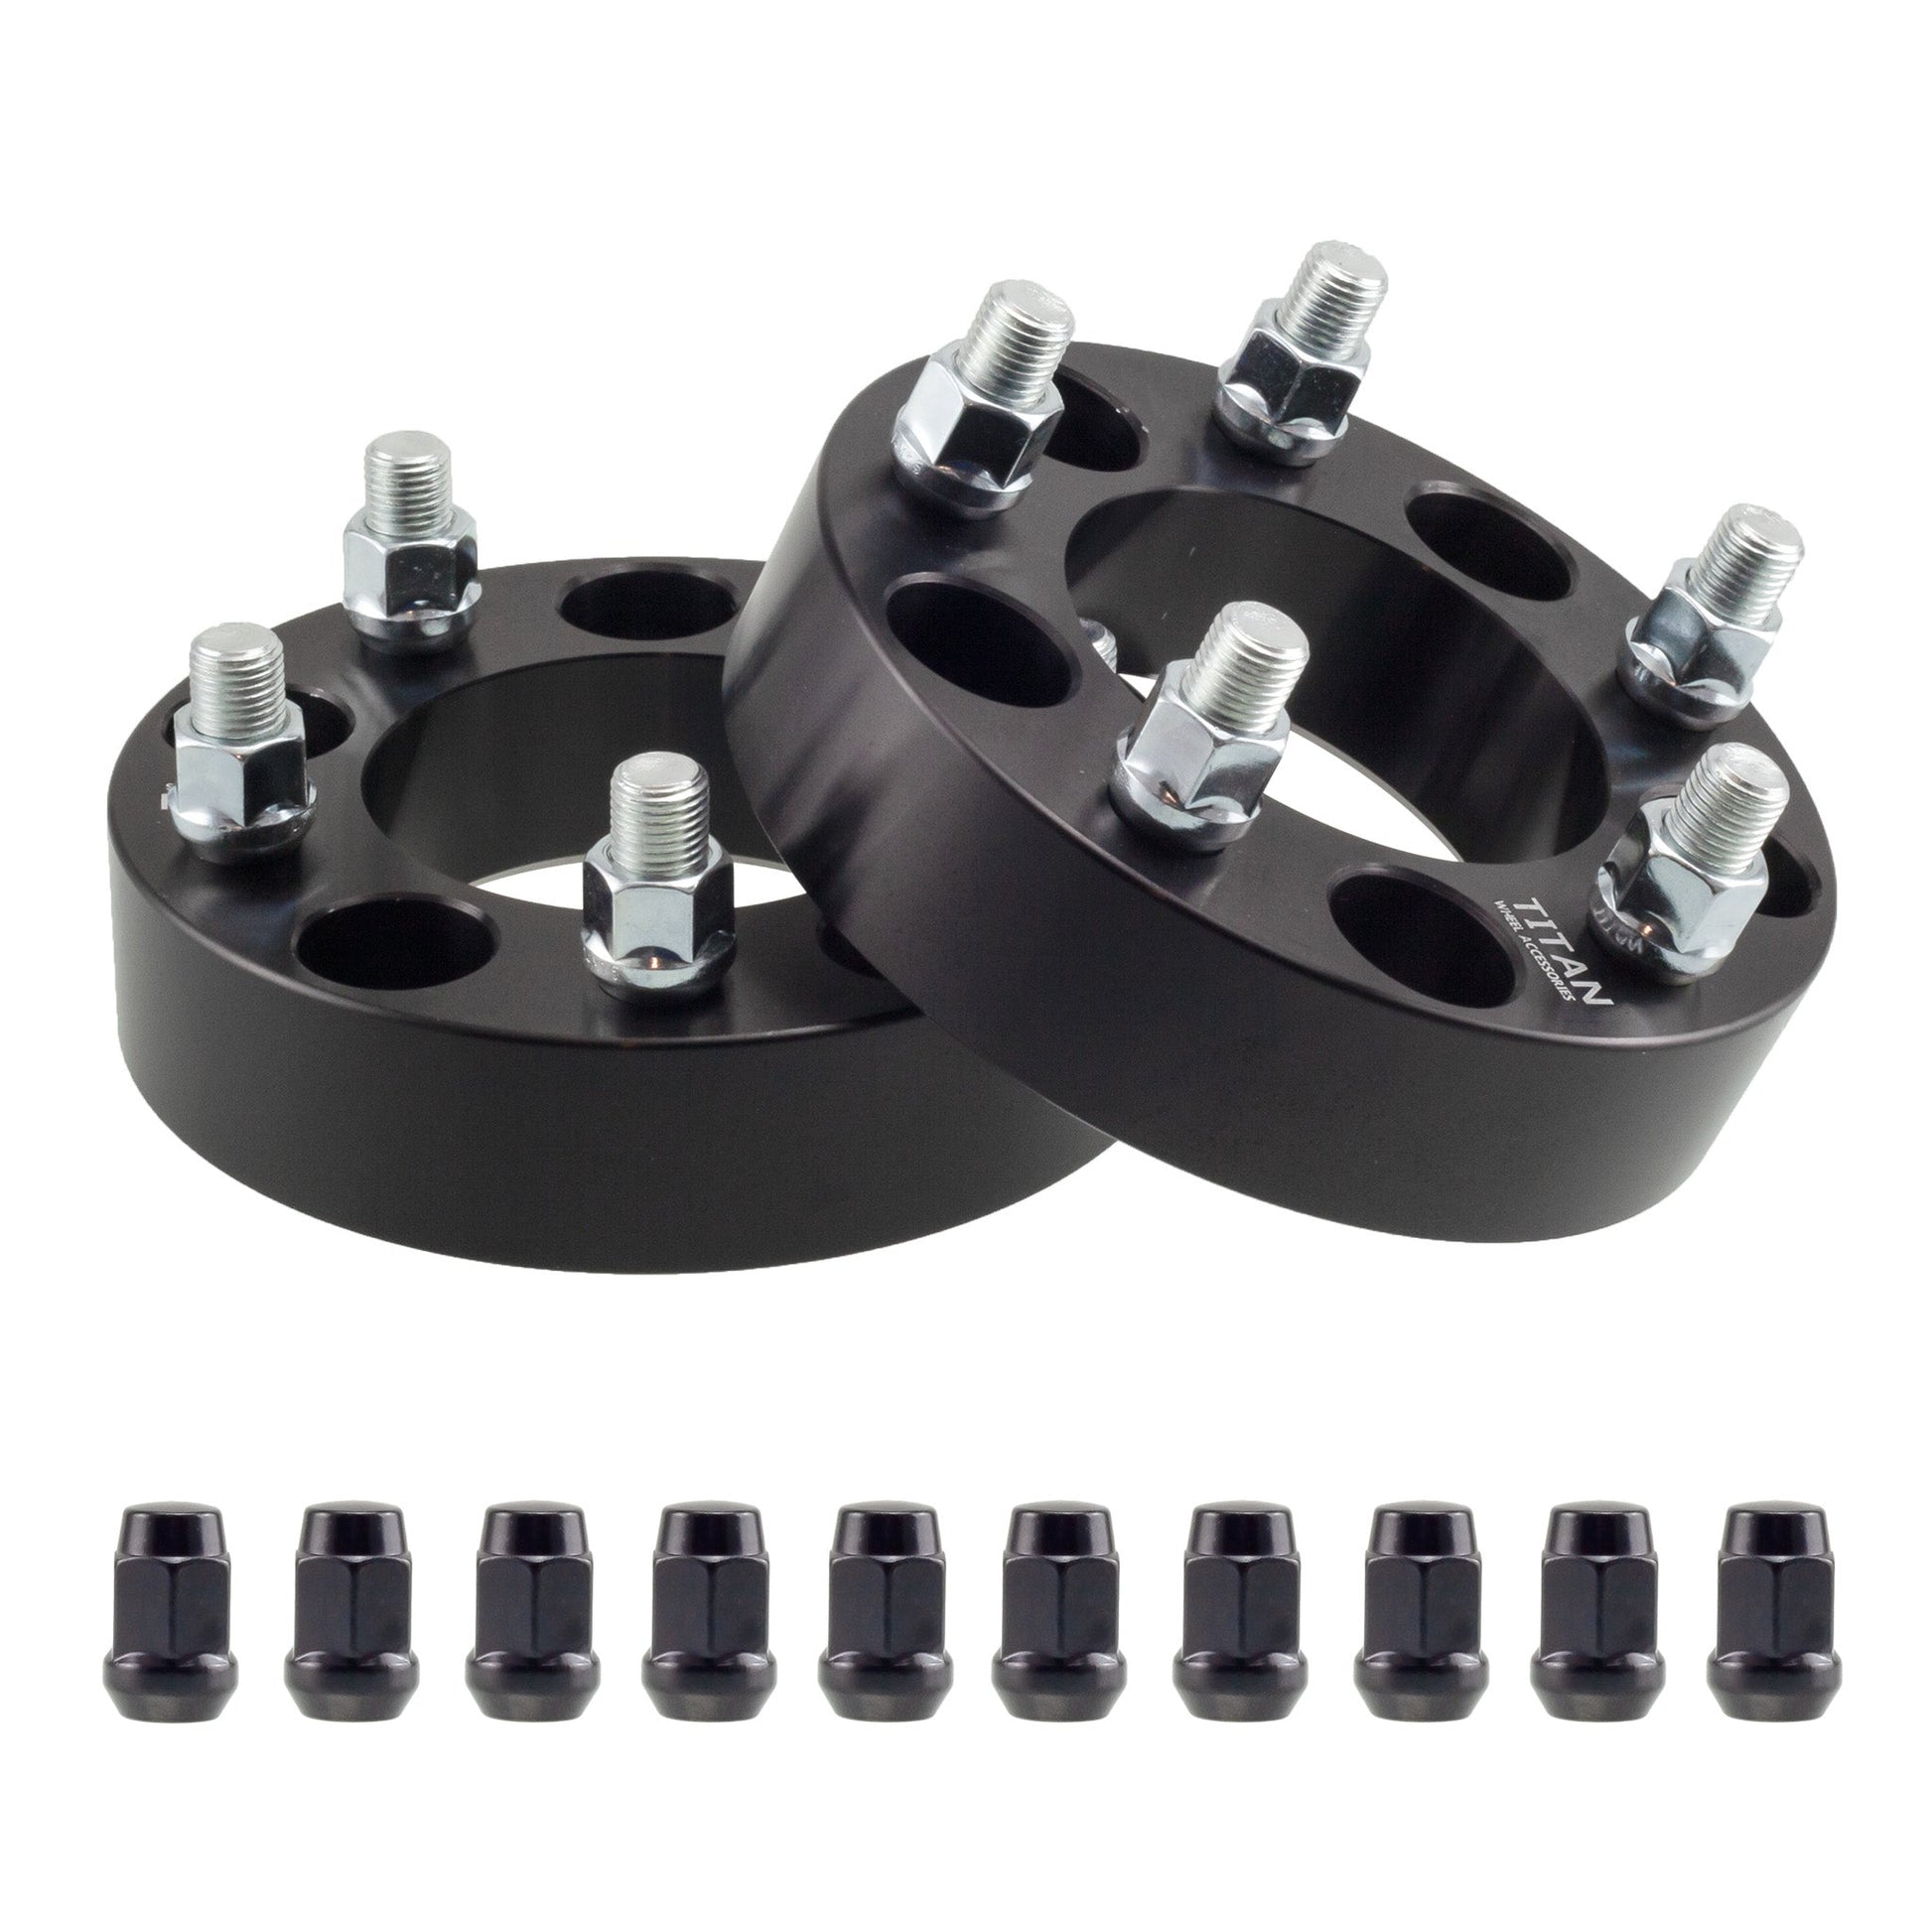 50mm (2") Titan Wheel Spacers for Toyota Tundra 5 Lug | 5x150 | 110 Hubcentric |14x1.5 Studs | Titan Wheel Accessories